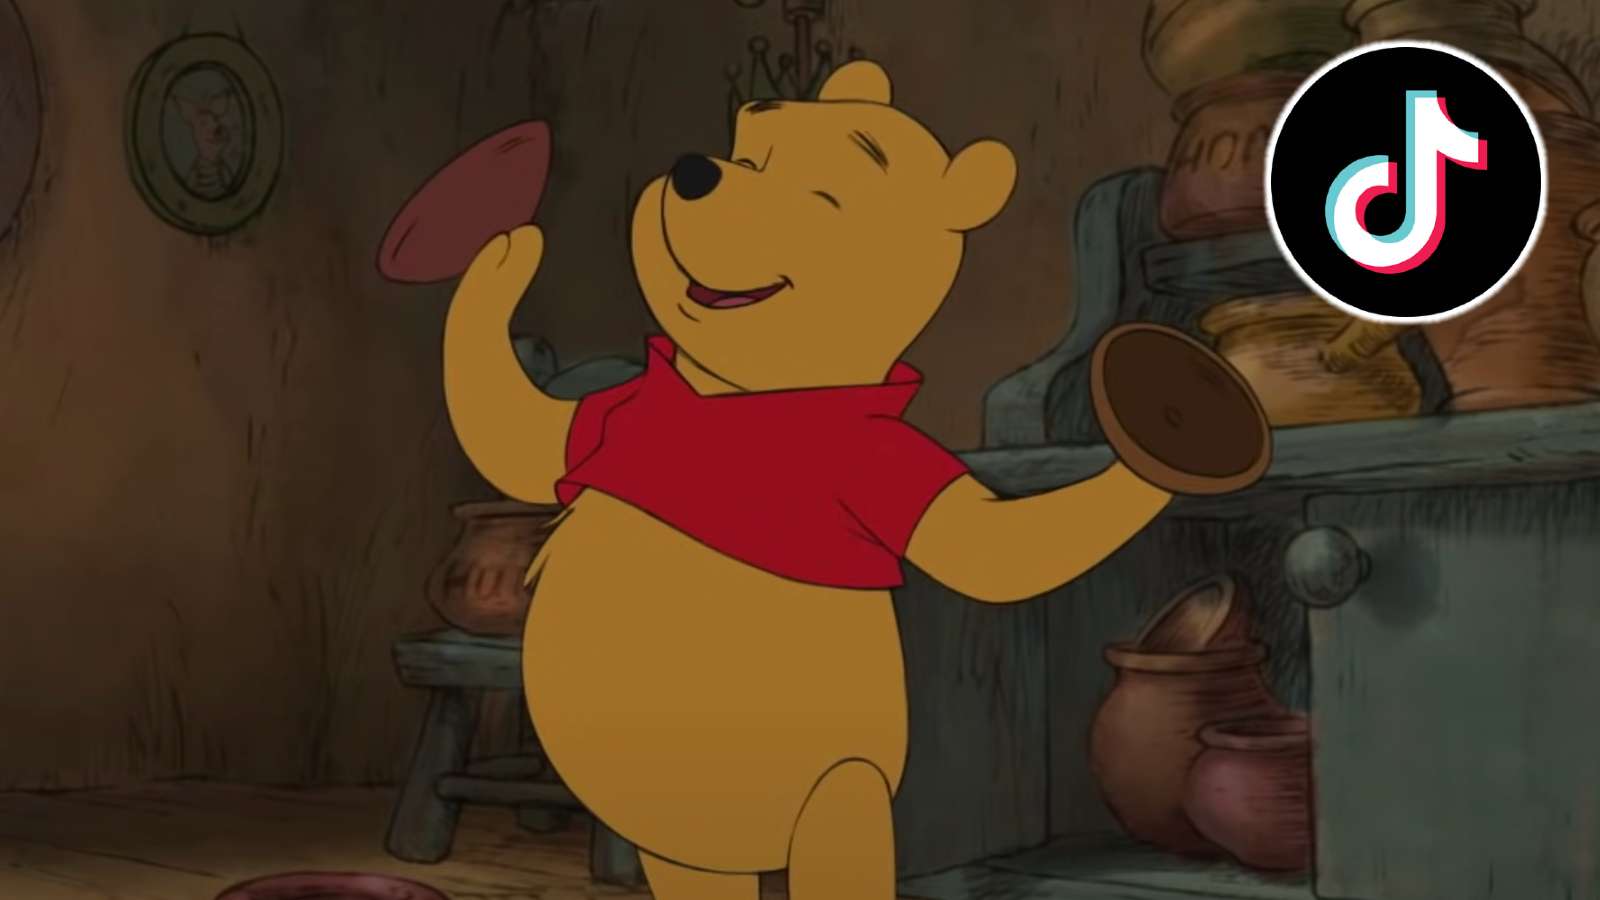 Winnie the Pooh next to TikTok logo